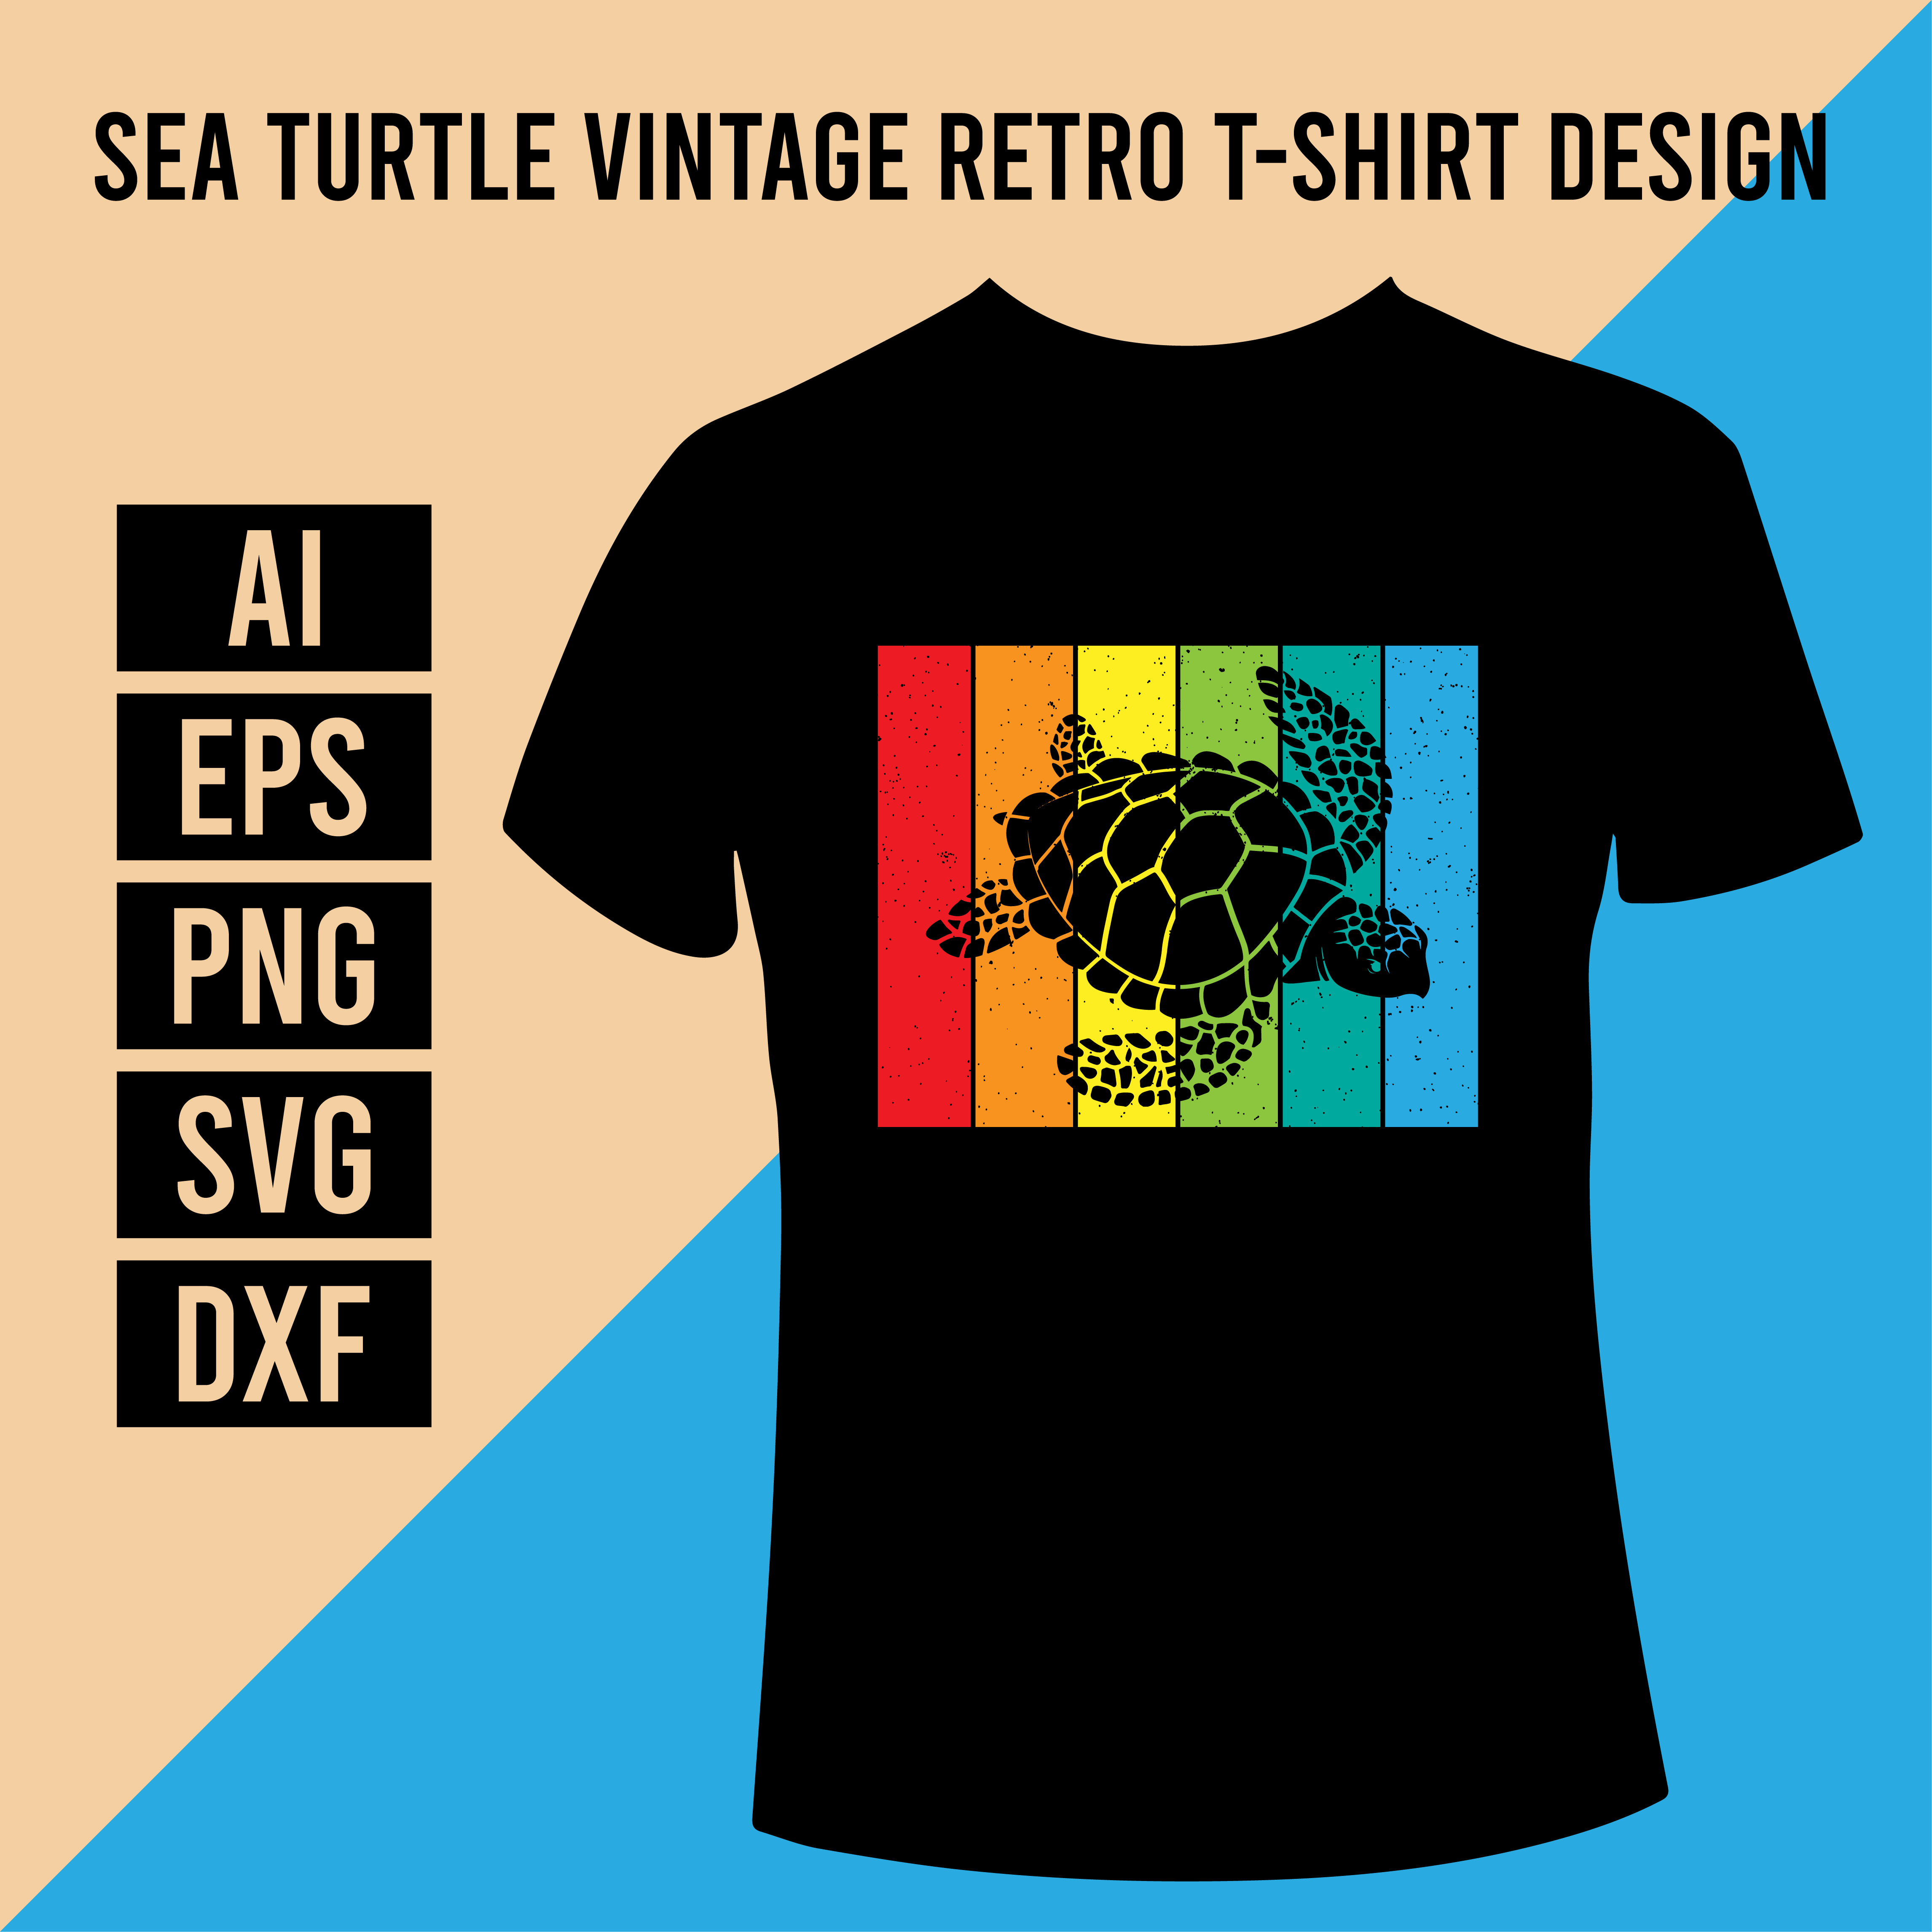 Sea Turtle Vintage Retro T-Shirt Design cover image.